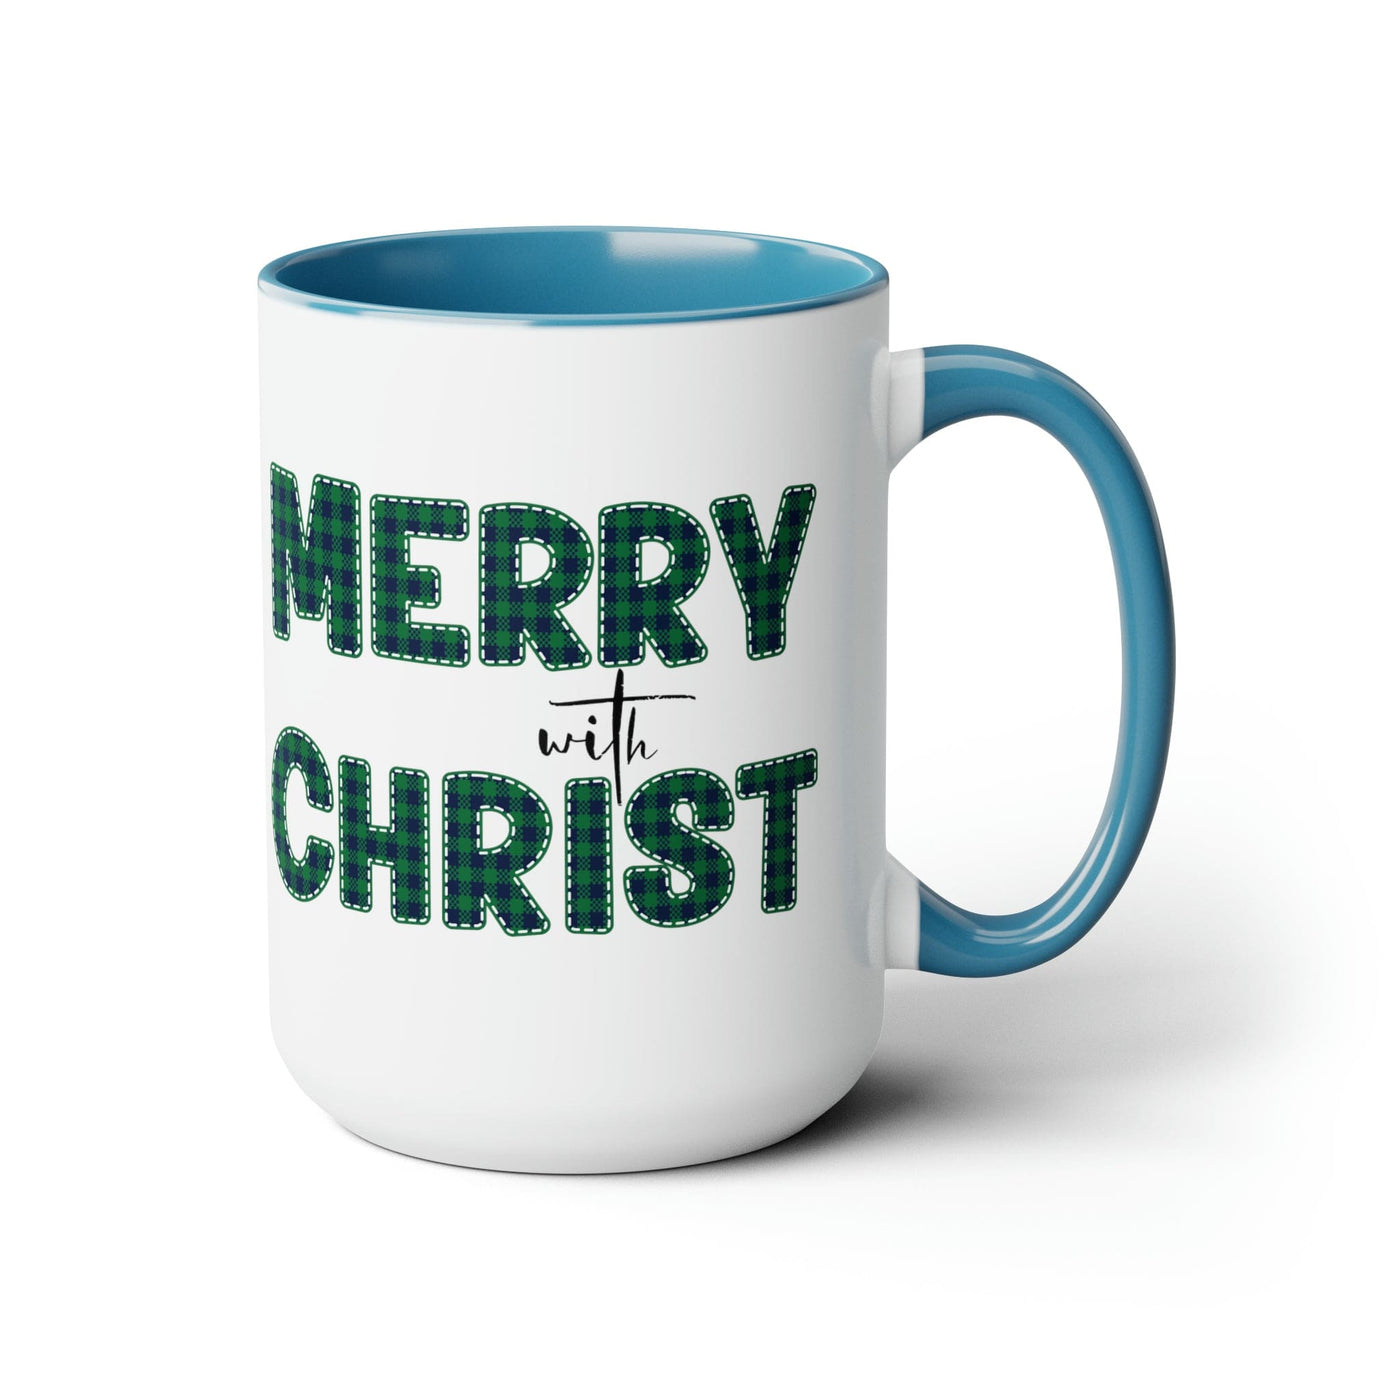 Accent Ceramic Coffee Mug 15oz - Merry With Christ Green Plaid Christmas